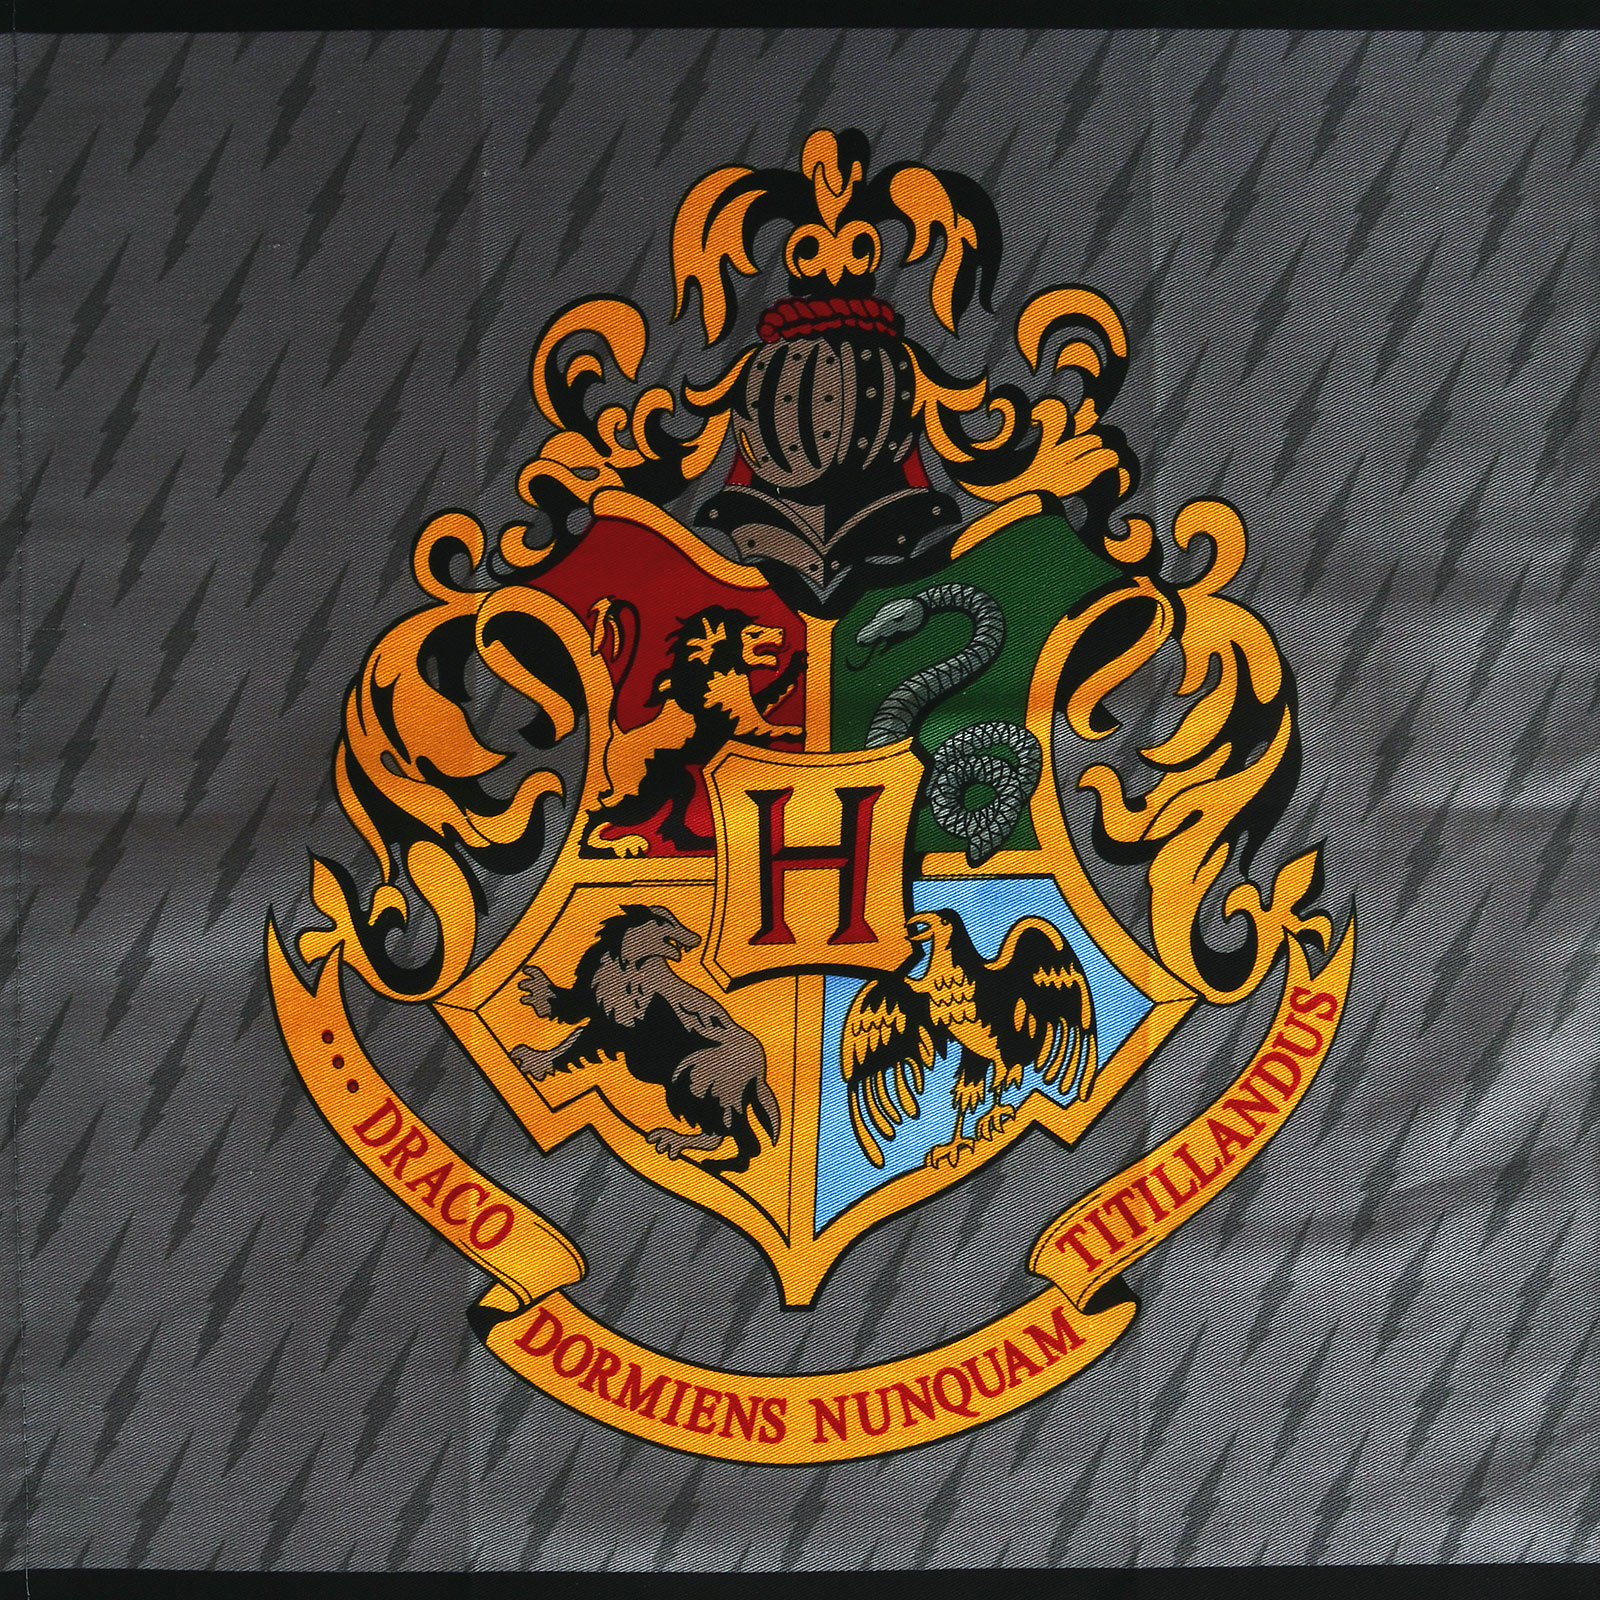 Harry Potter - Carte des Maraudeurs & Set de torchons Hogwarts